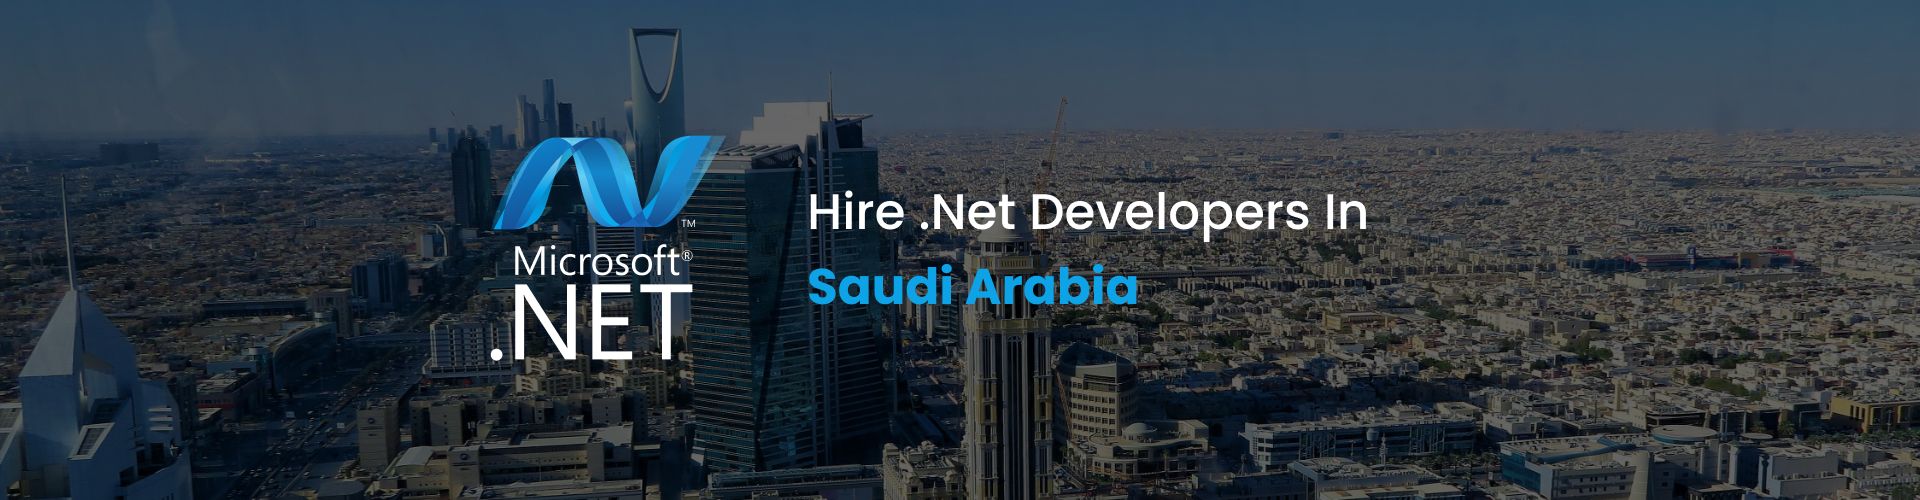 hire .net developers in saudi arabia